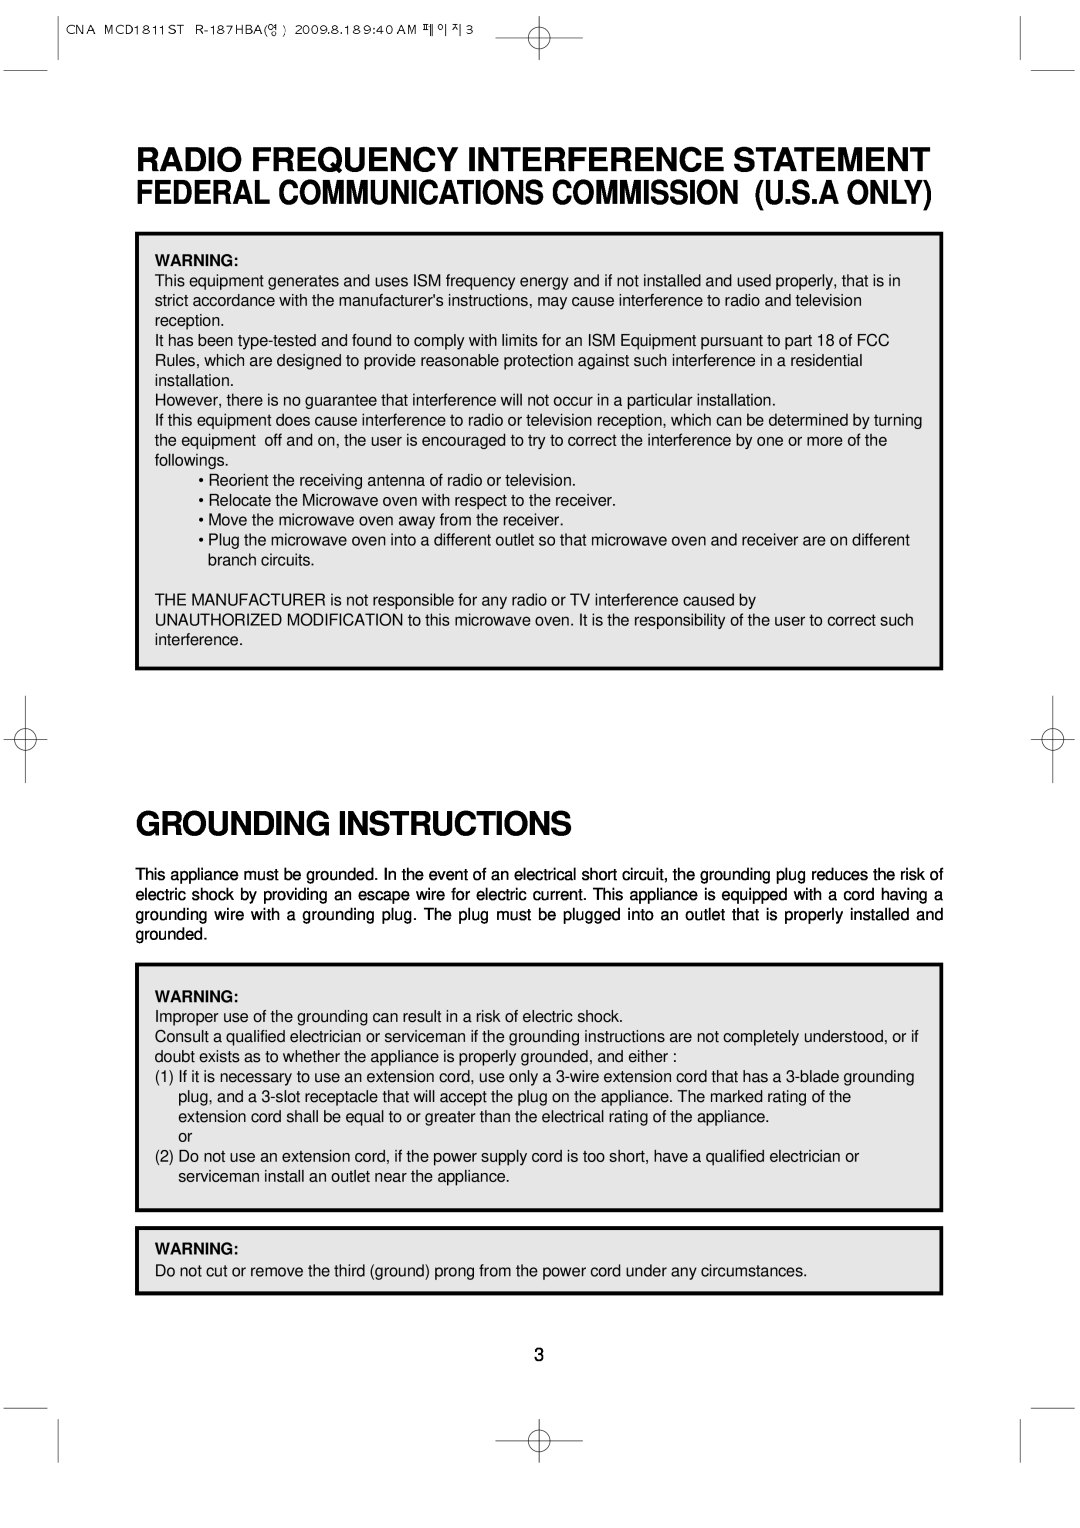 Magic Chef MCD1811ST instruction manual Grounding Instructions 